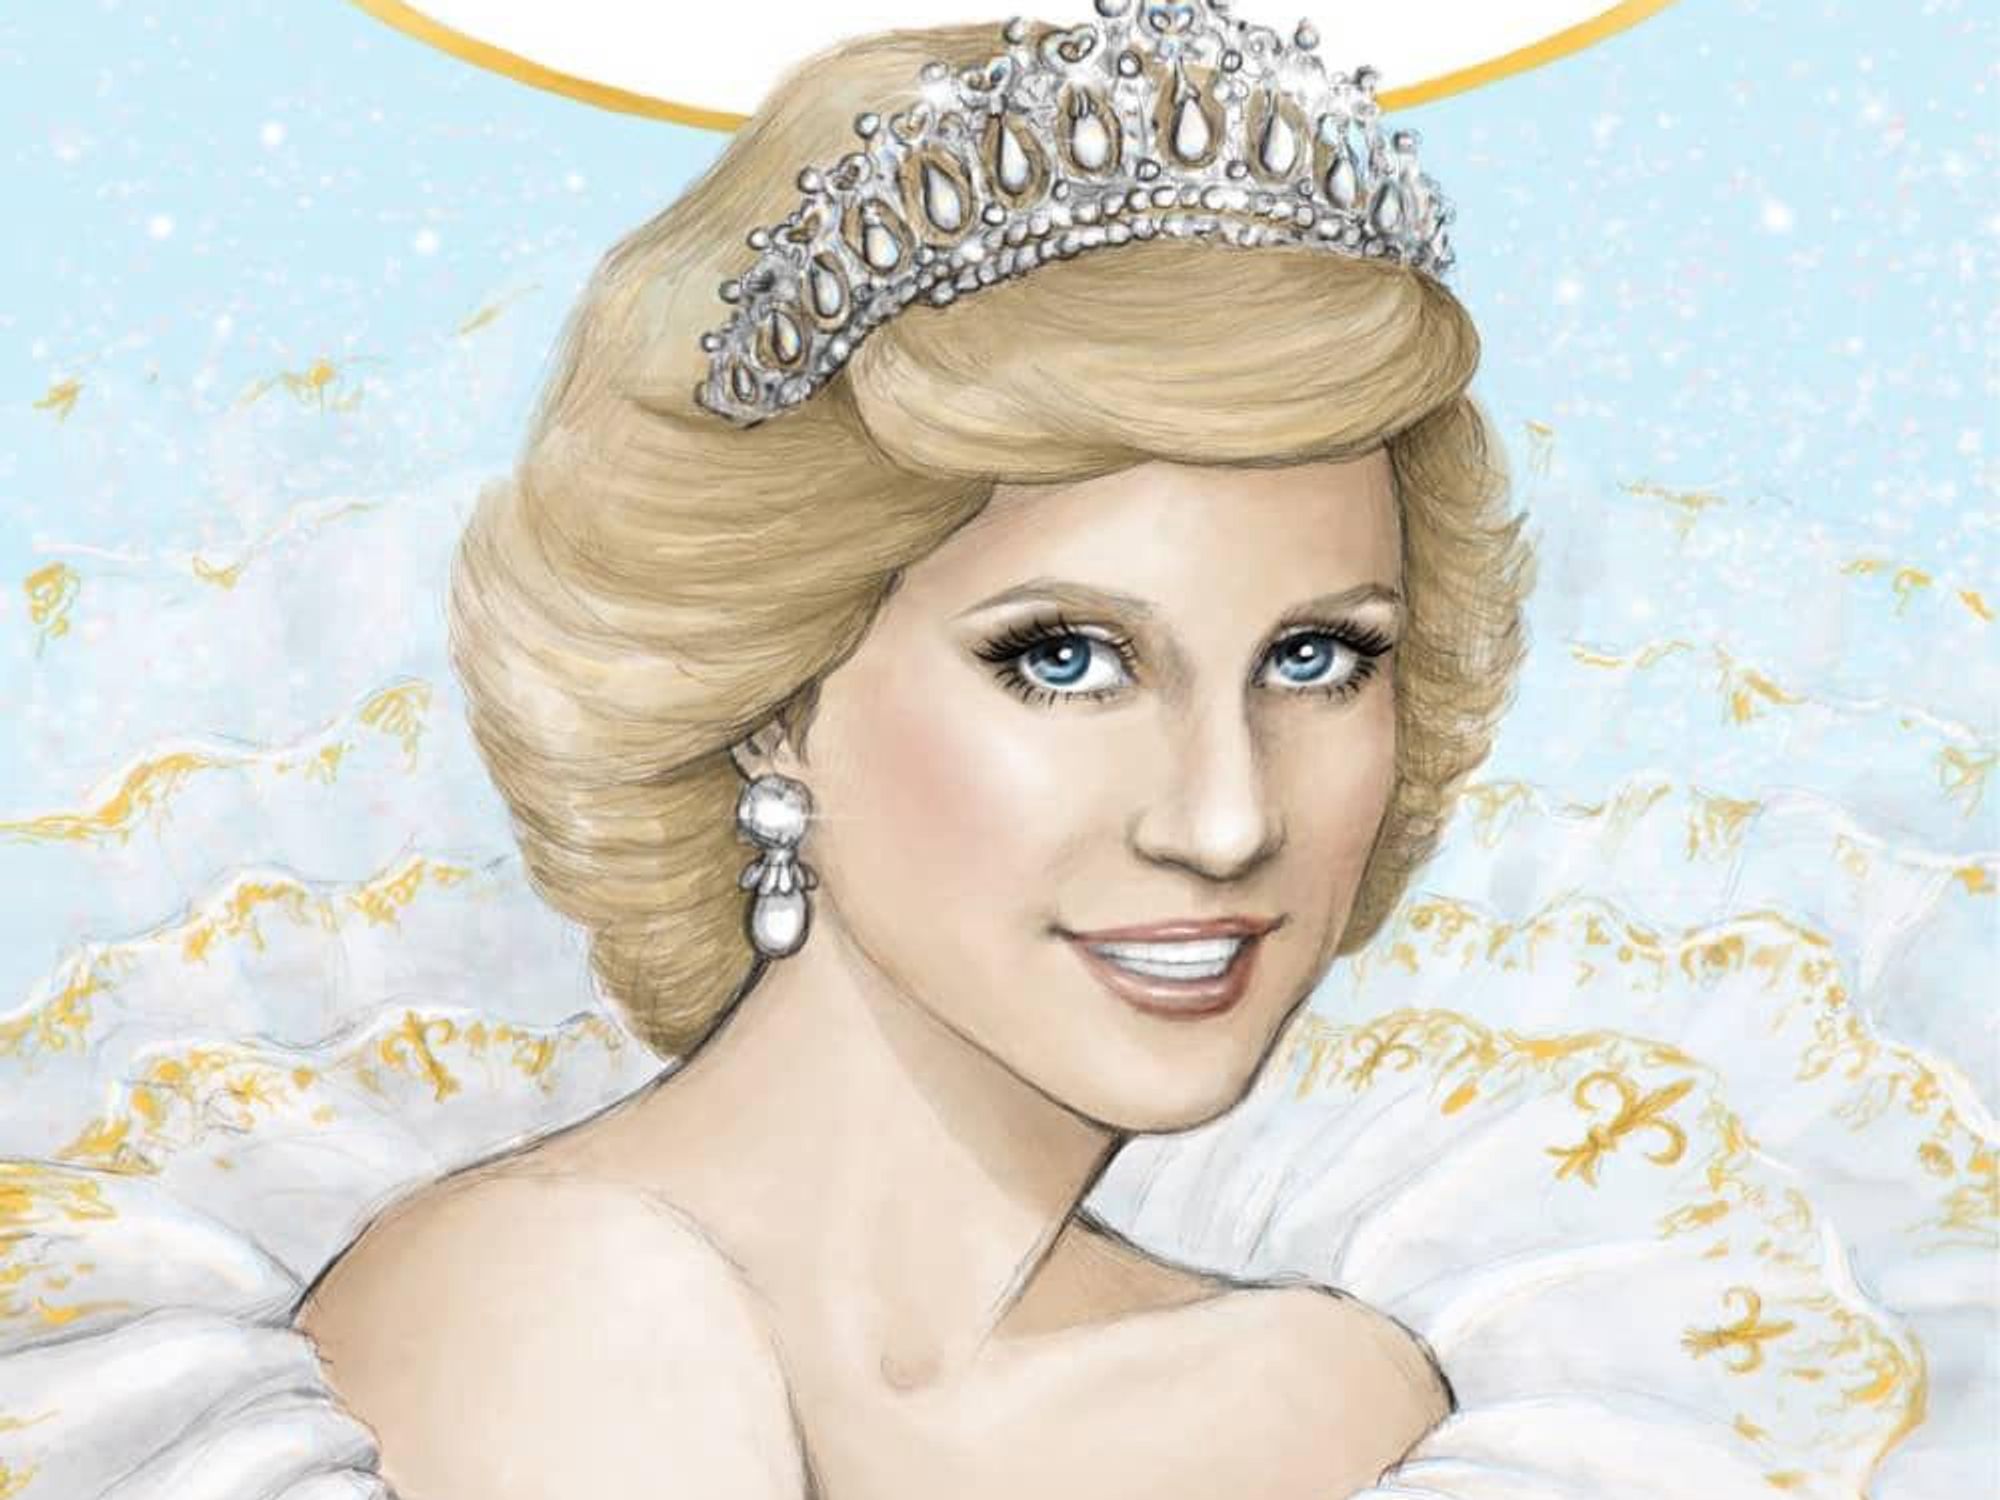 Princess Diana children's book